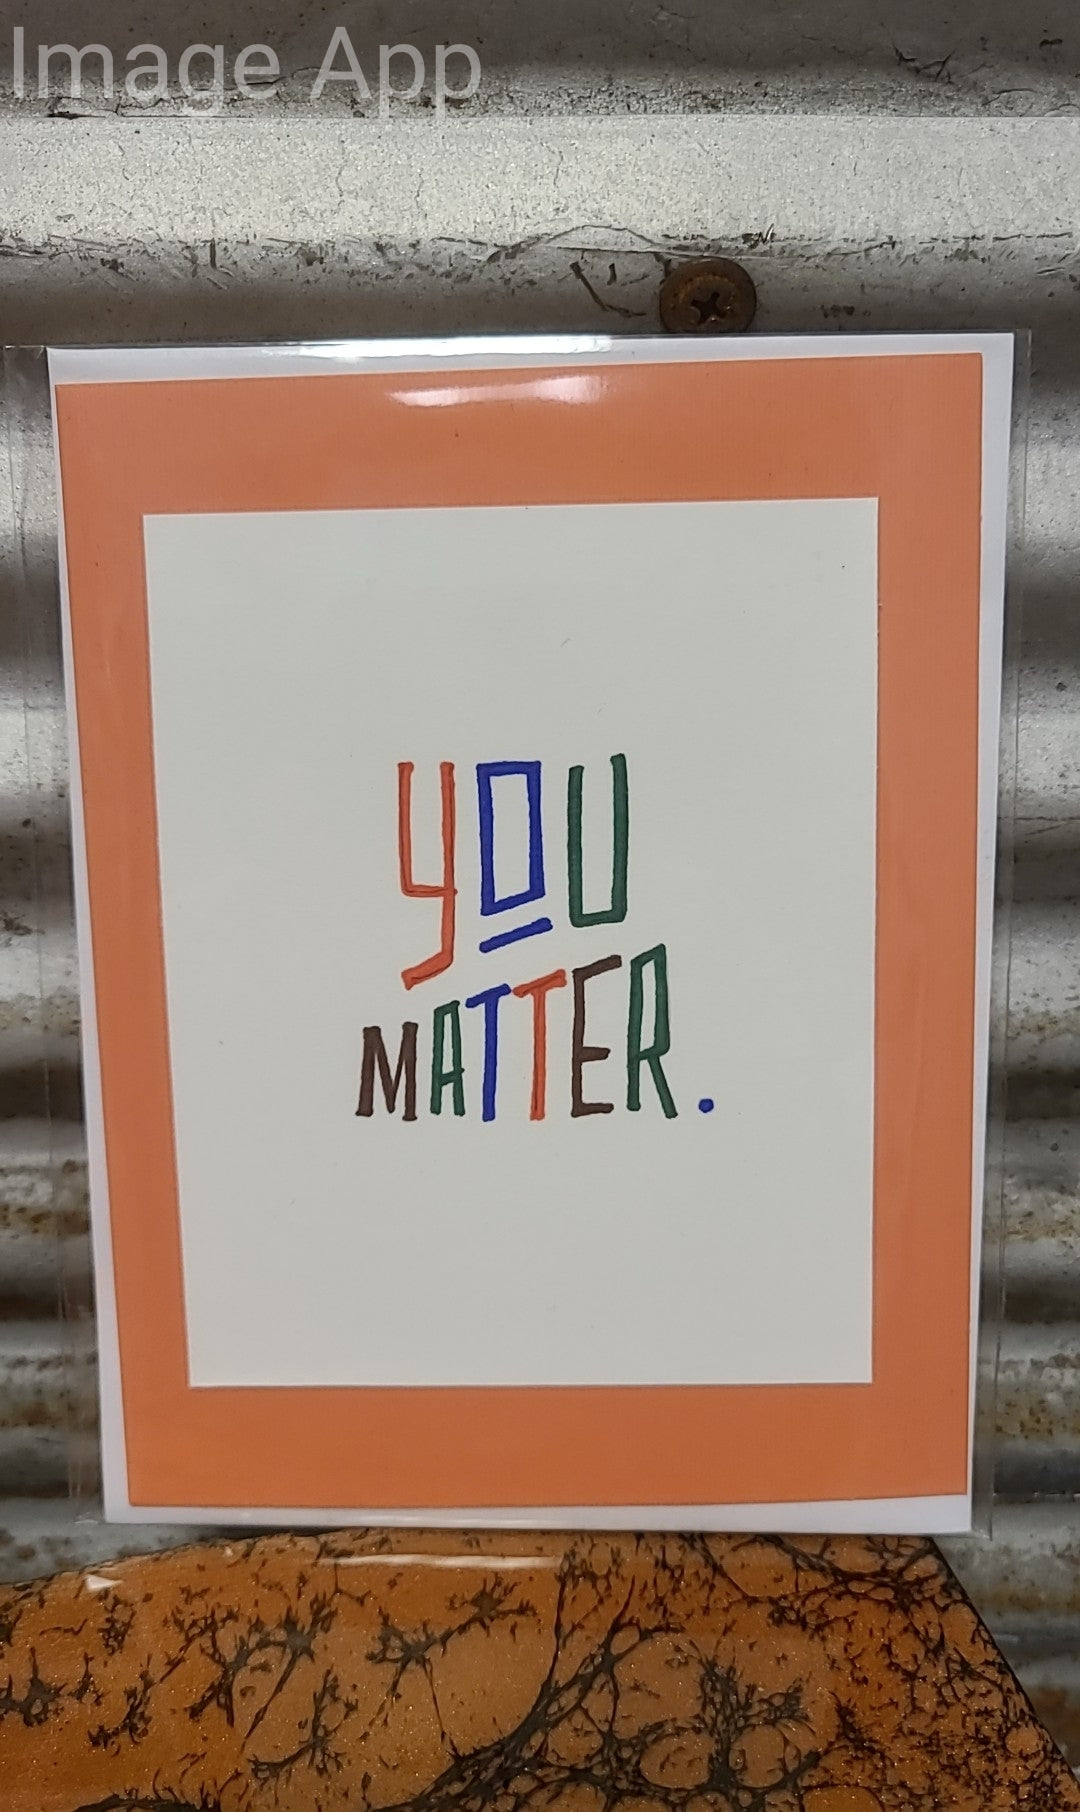 You Matter Card